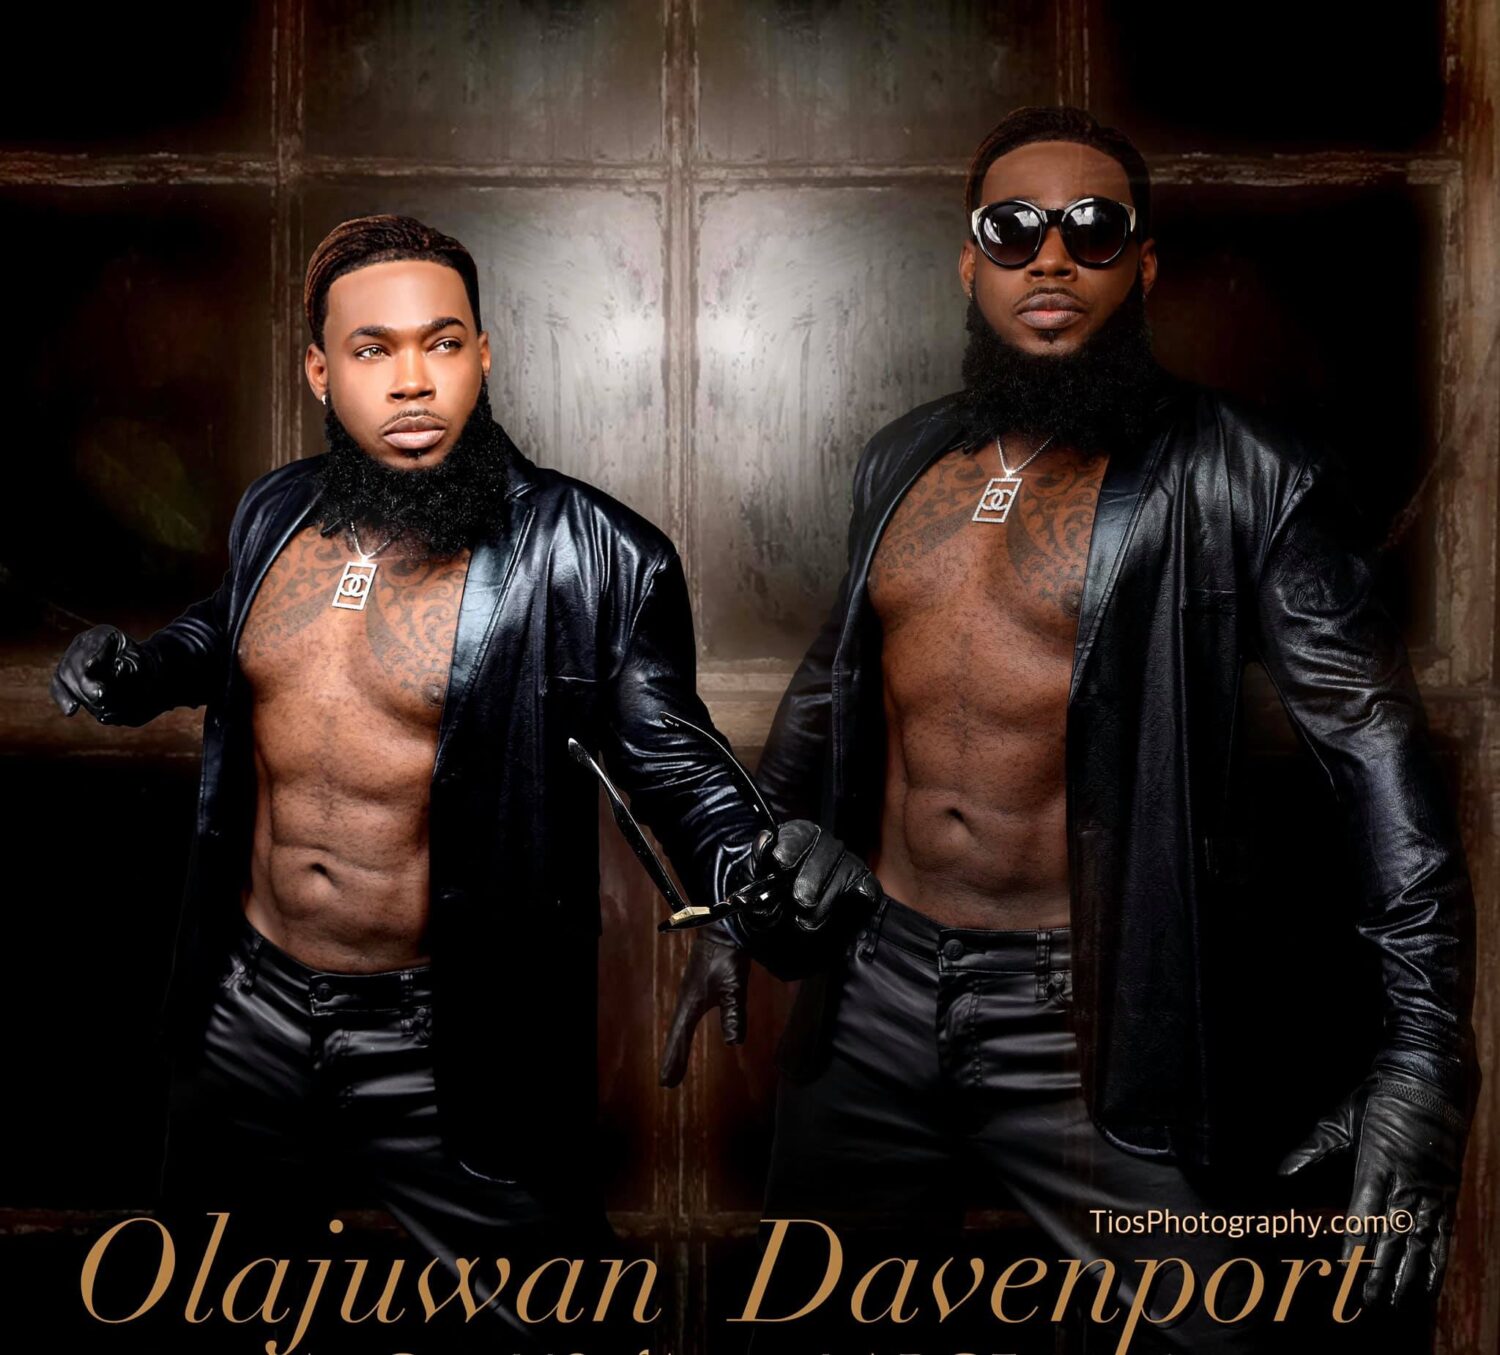 Olajuwan Davenport - Photo by Tios Photography